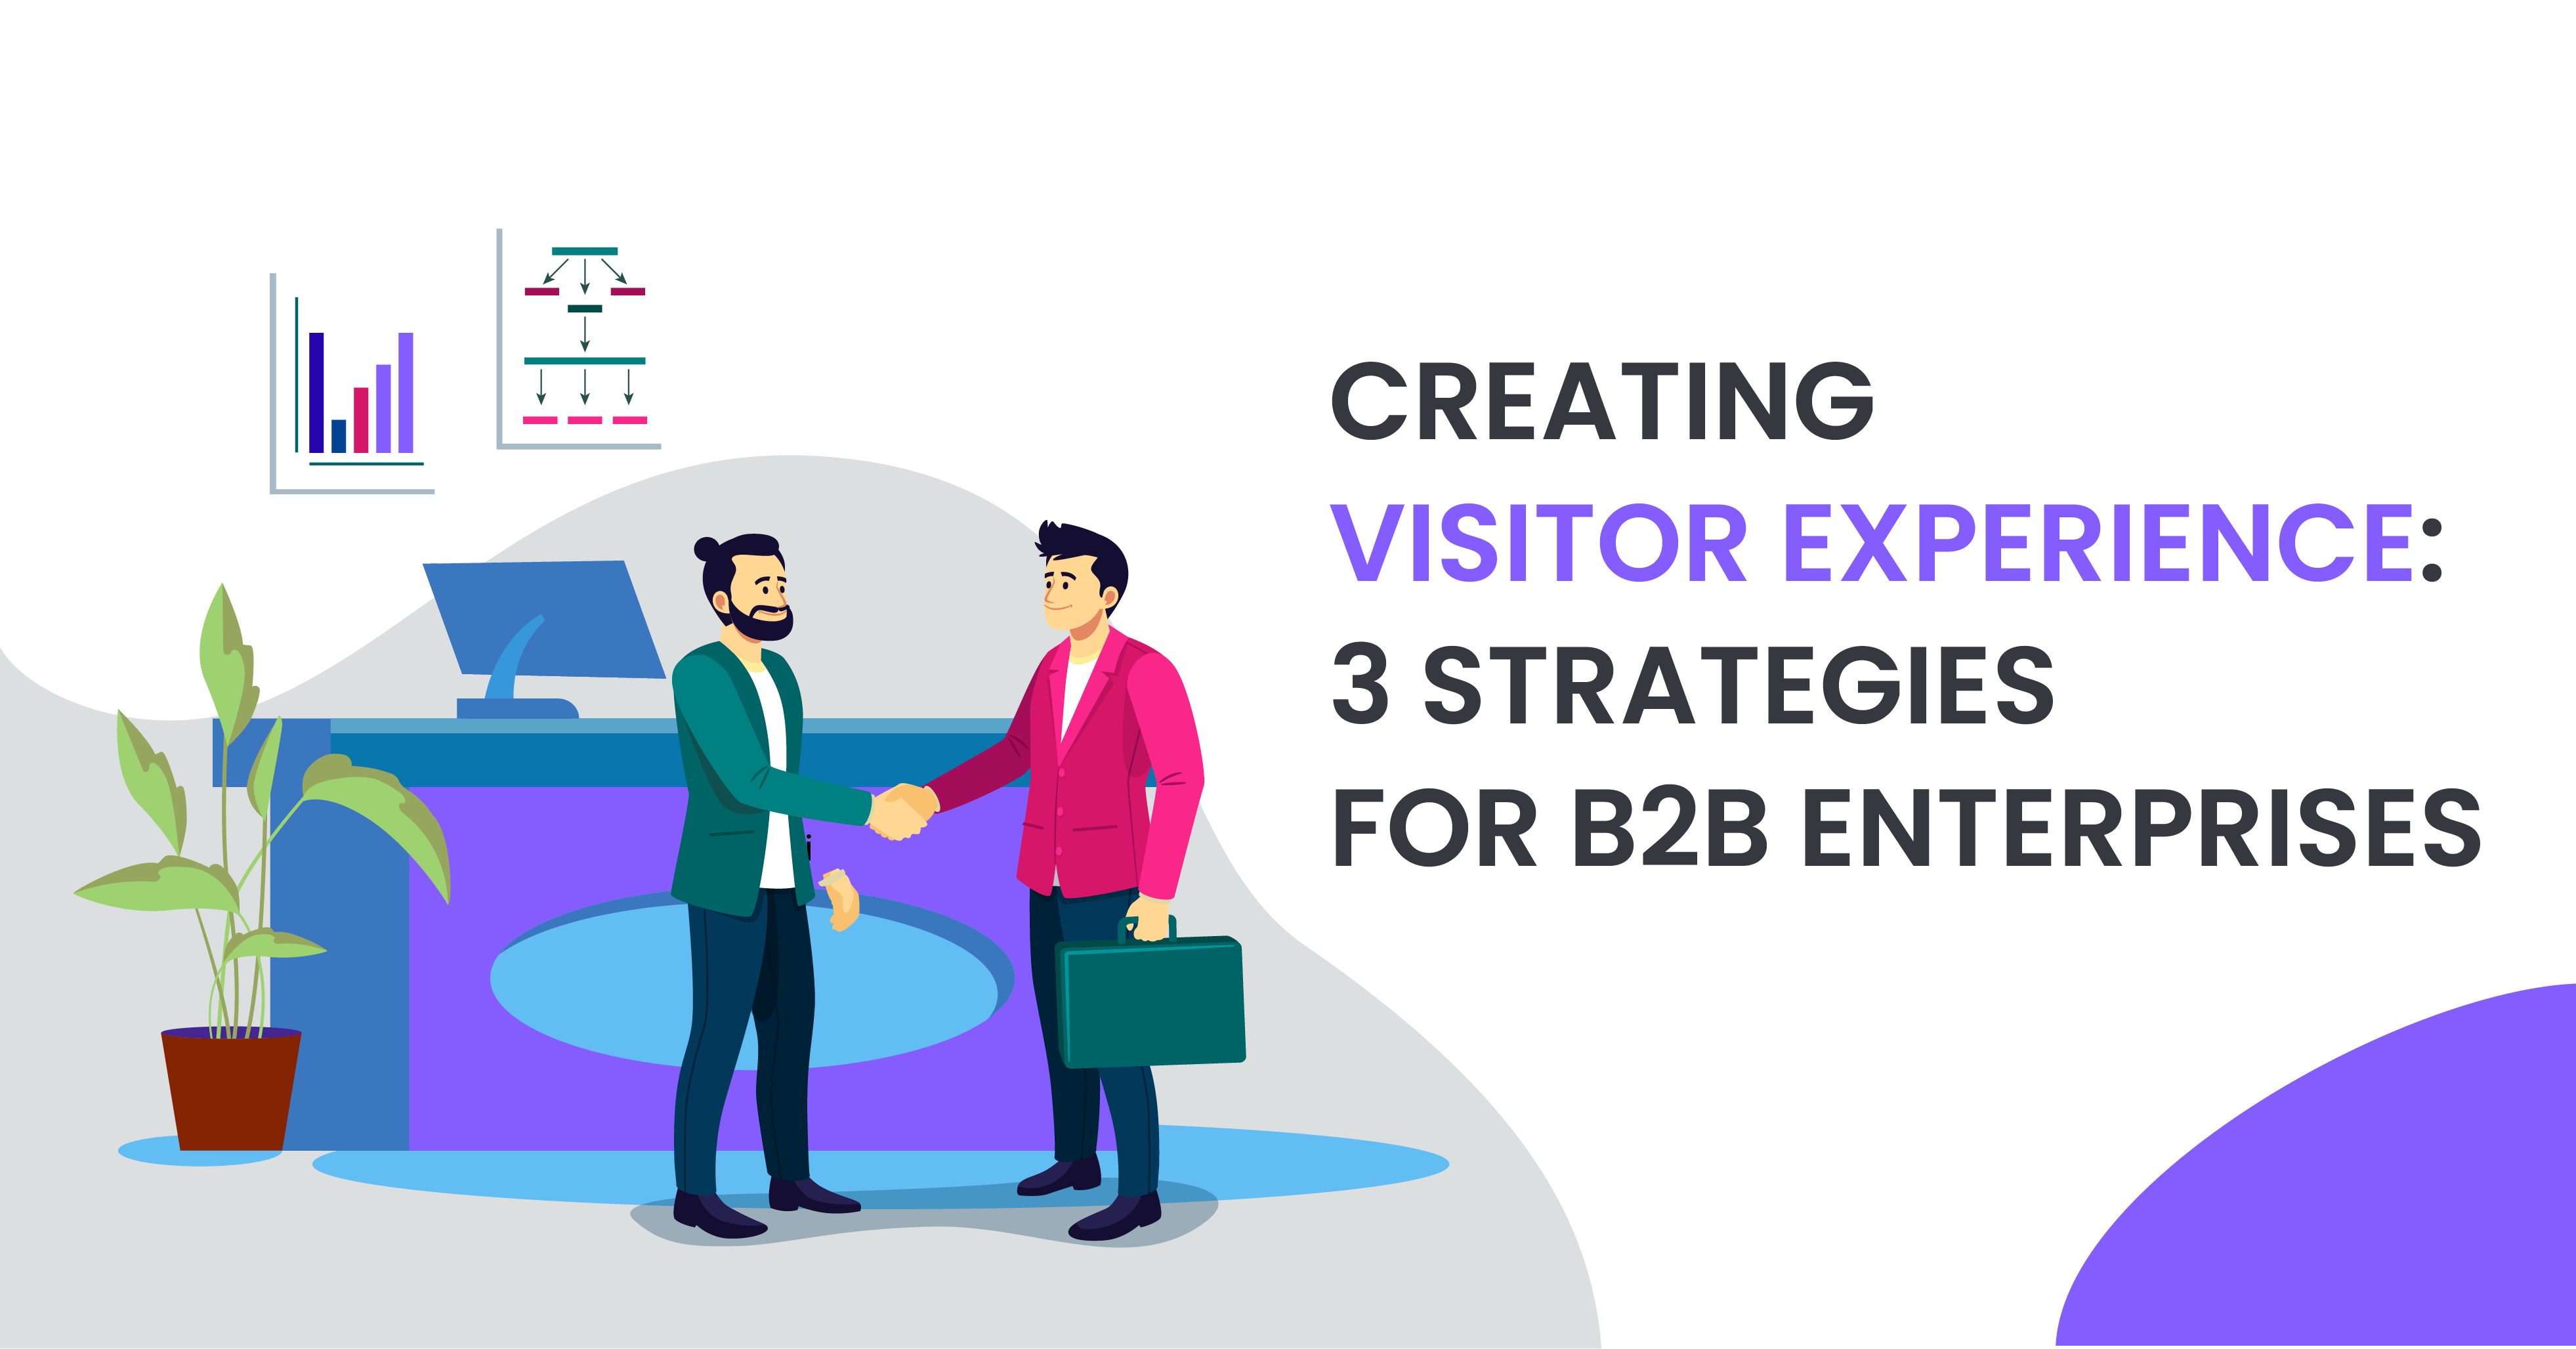 Creating Visitor Experience: 3 Strategies for B2B Enterprises